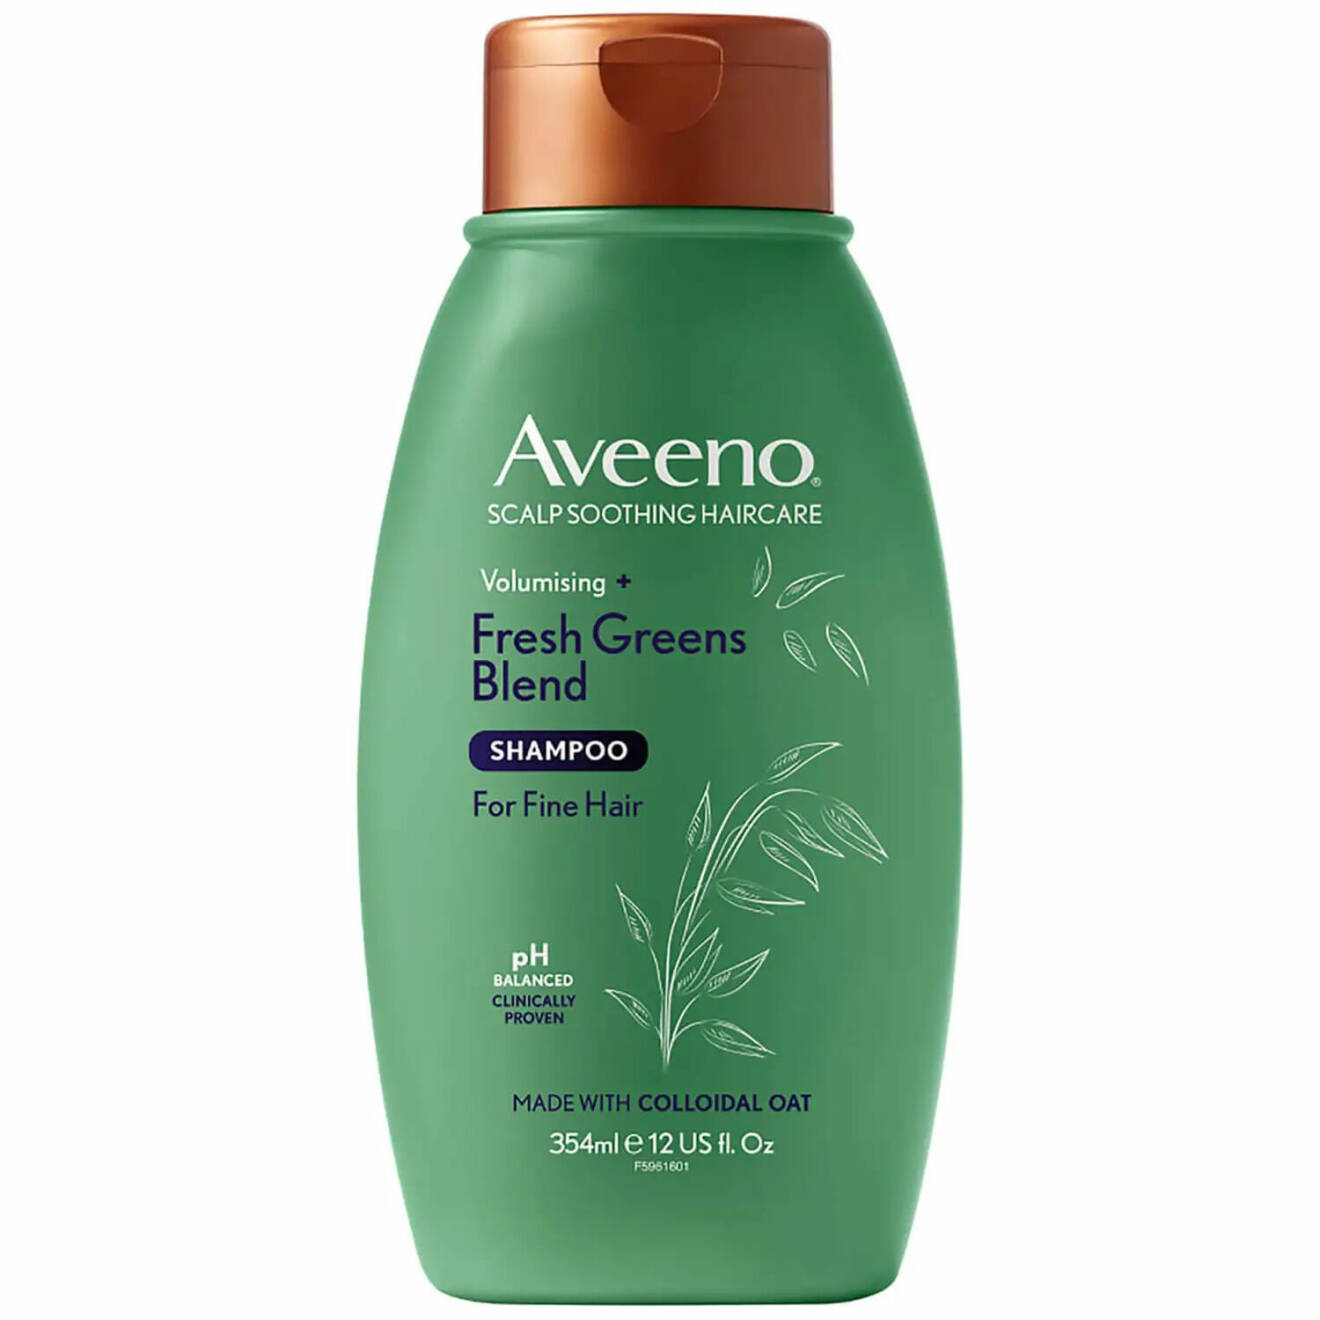 Aveeno fresh greens blend refresh &amp; thicken shampoo